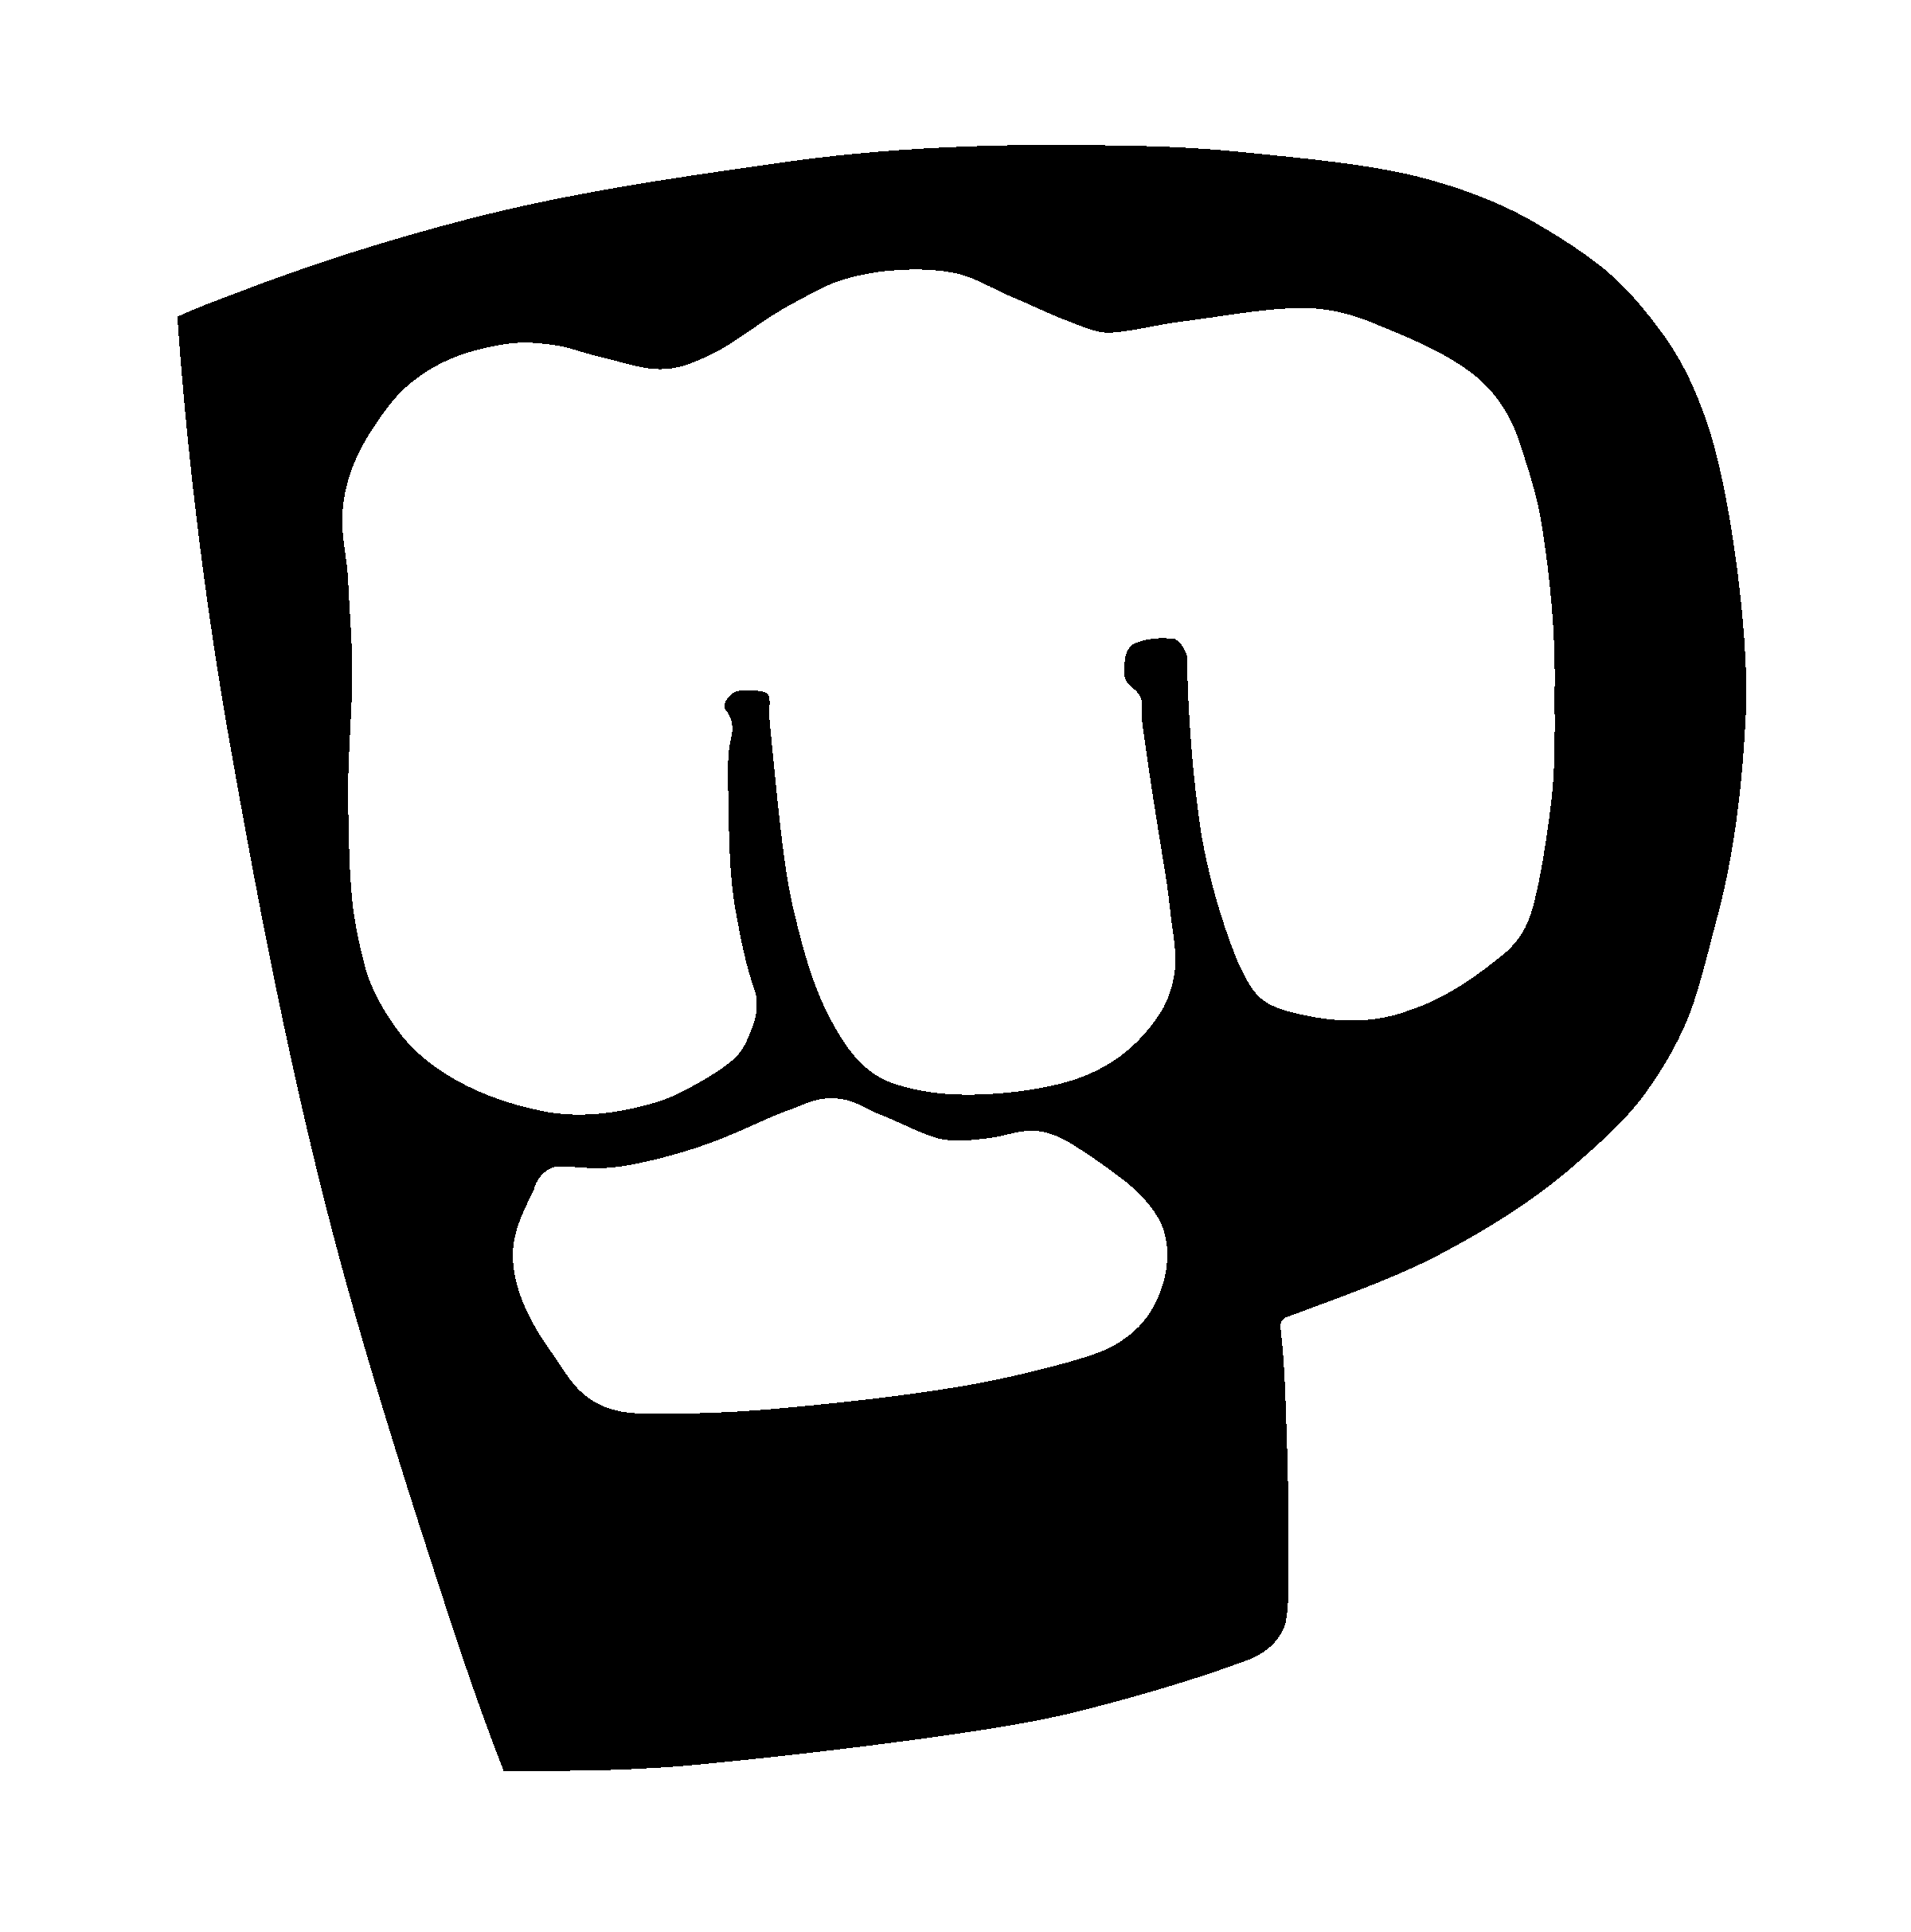 PewDiePie Logo - PewDiePie Logo PNG Transparent & SVG Vector - Freebie Supply